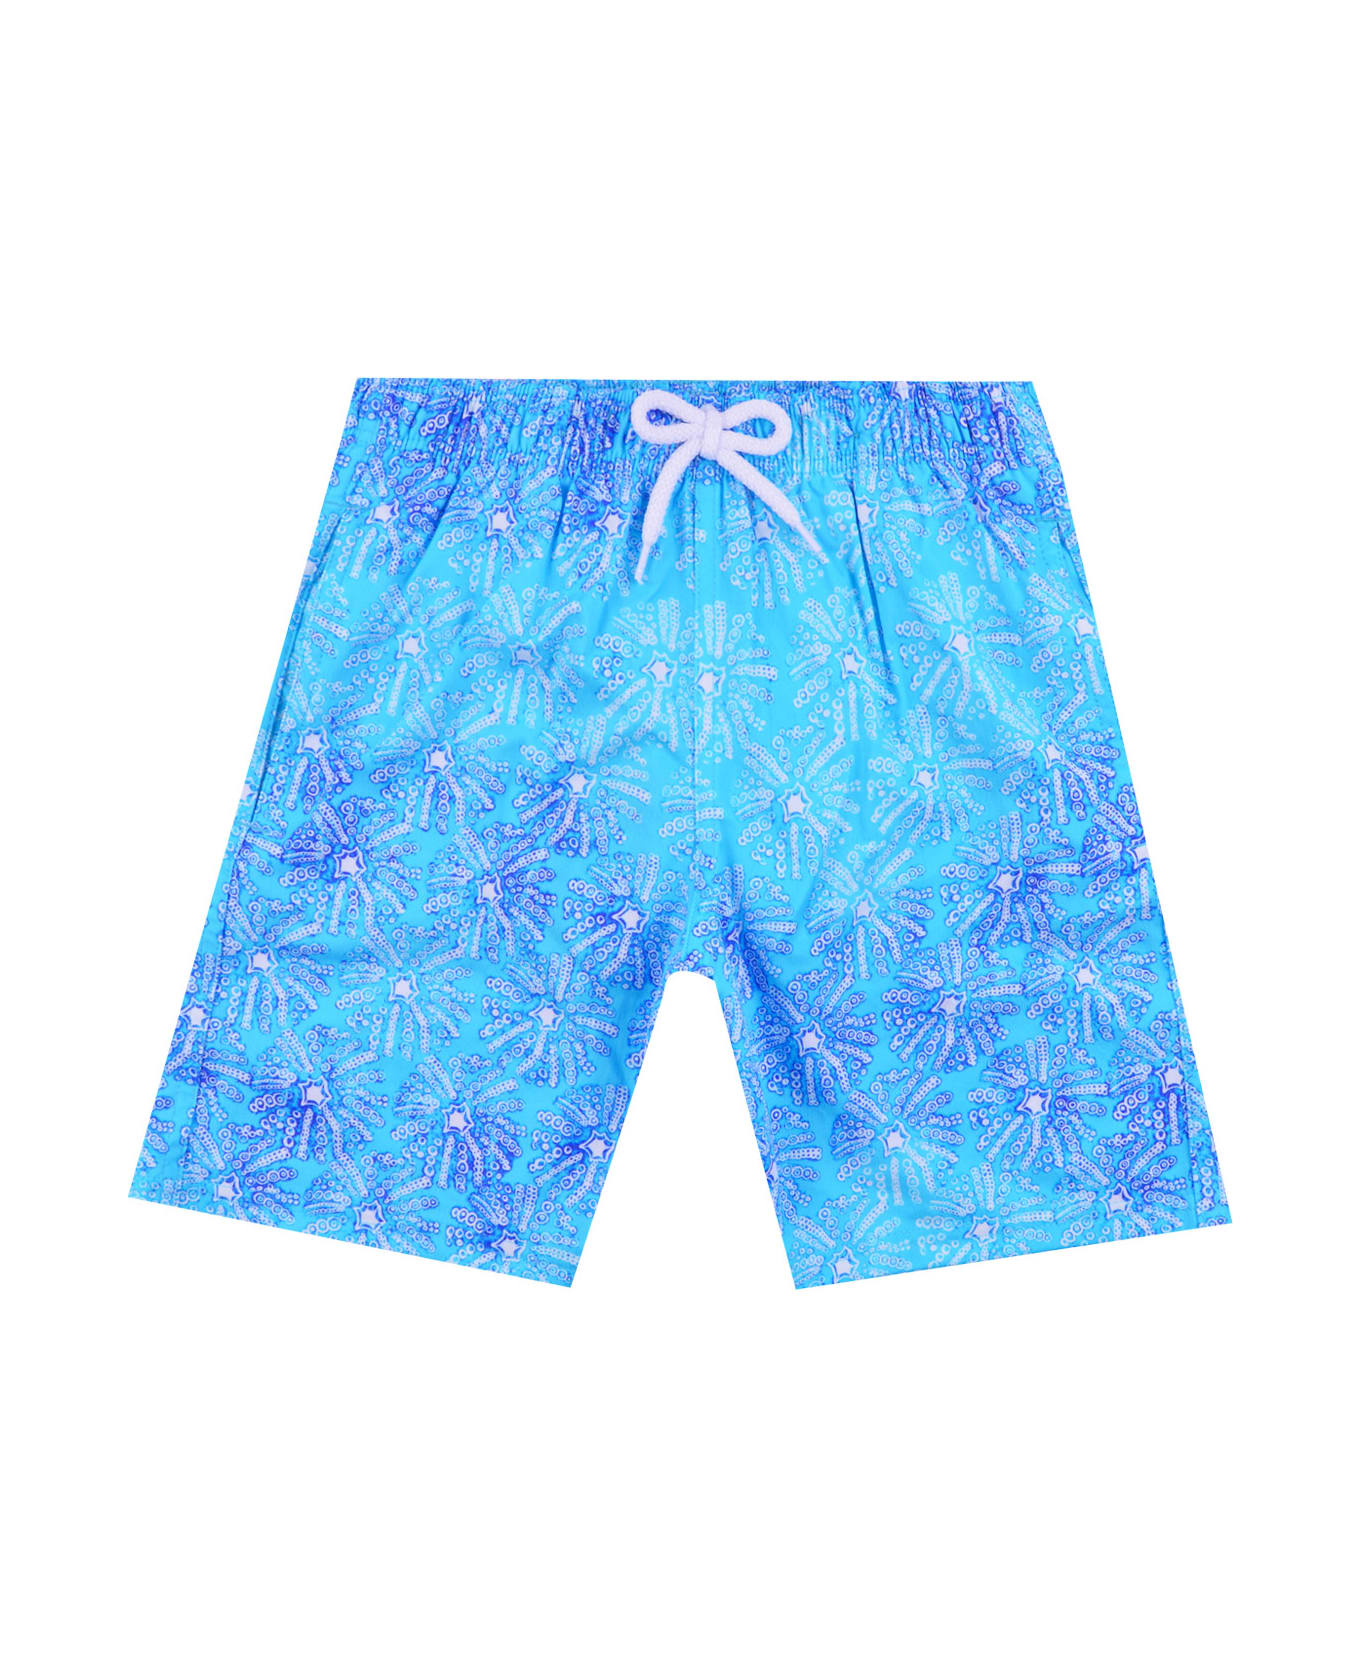 Vilebrequin Urchins Swim Shorts - Light blue